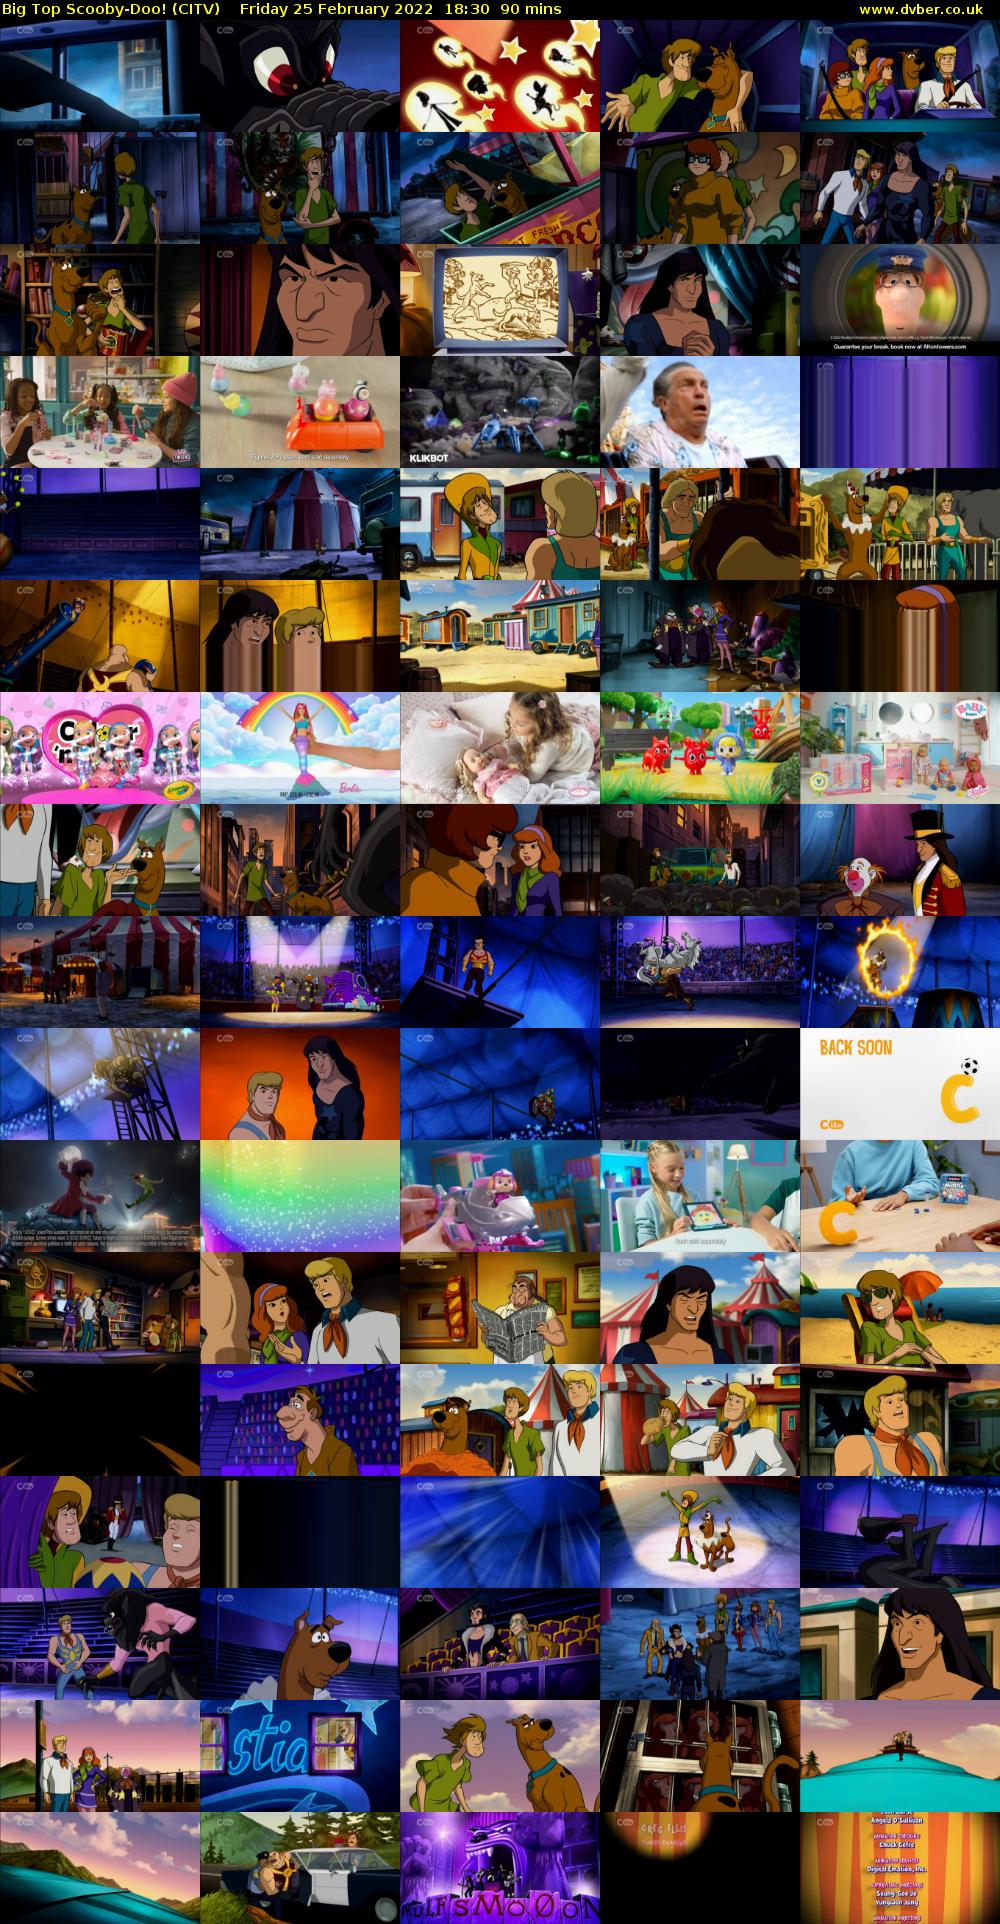 Big Top Scooby-Doo! (CITV) Friday 25 February 2022 18:30 - 20:00